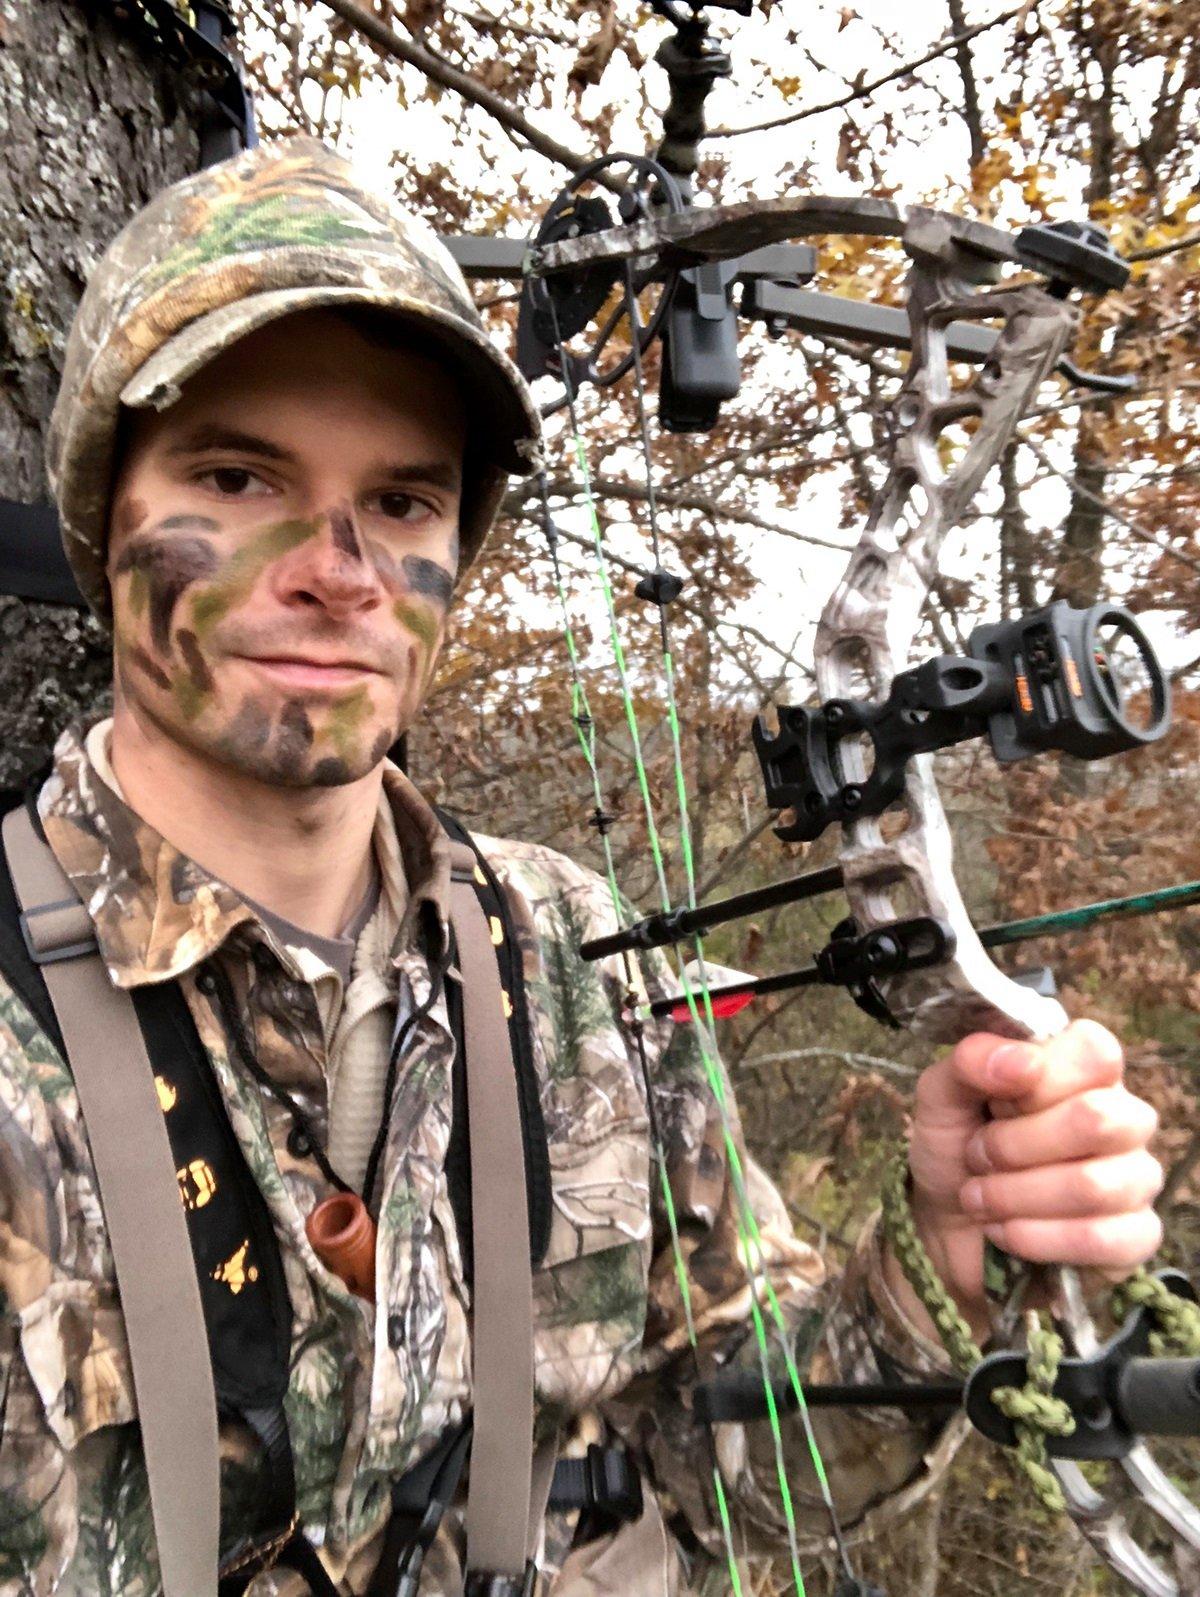 Love my camo bibs camouflage hunting selfie